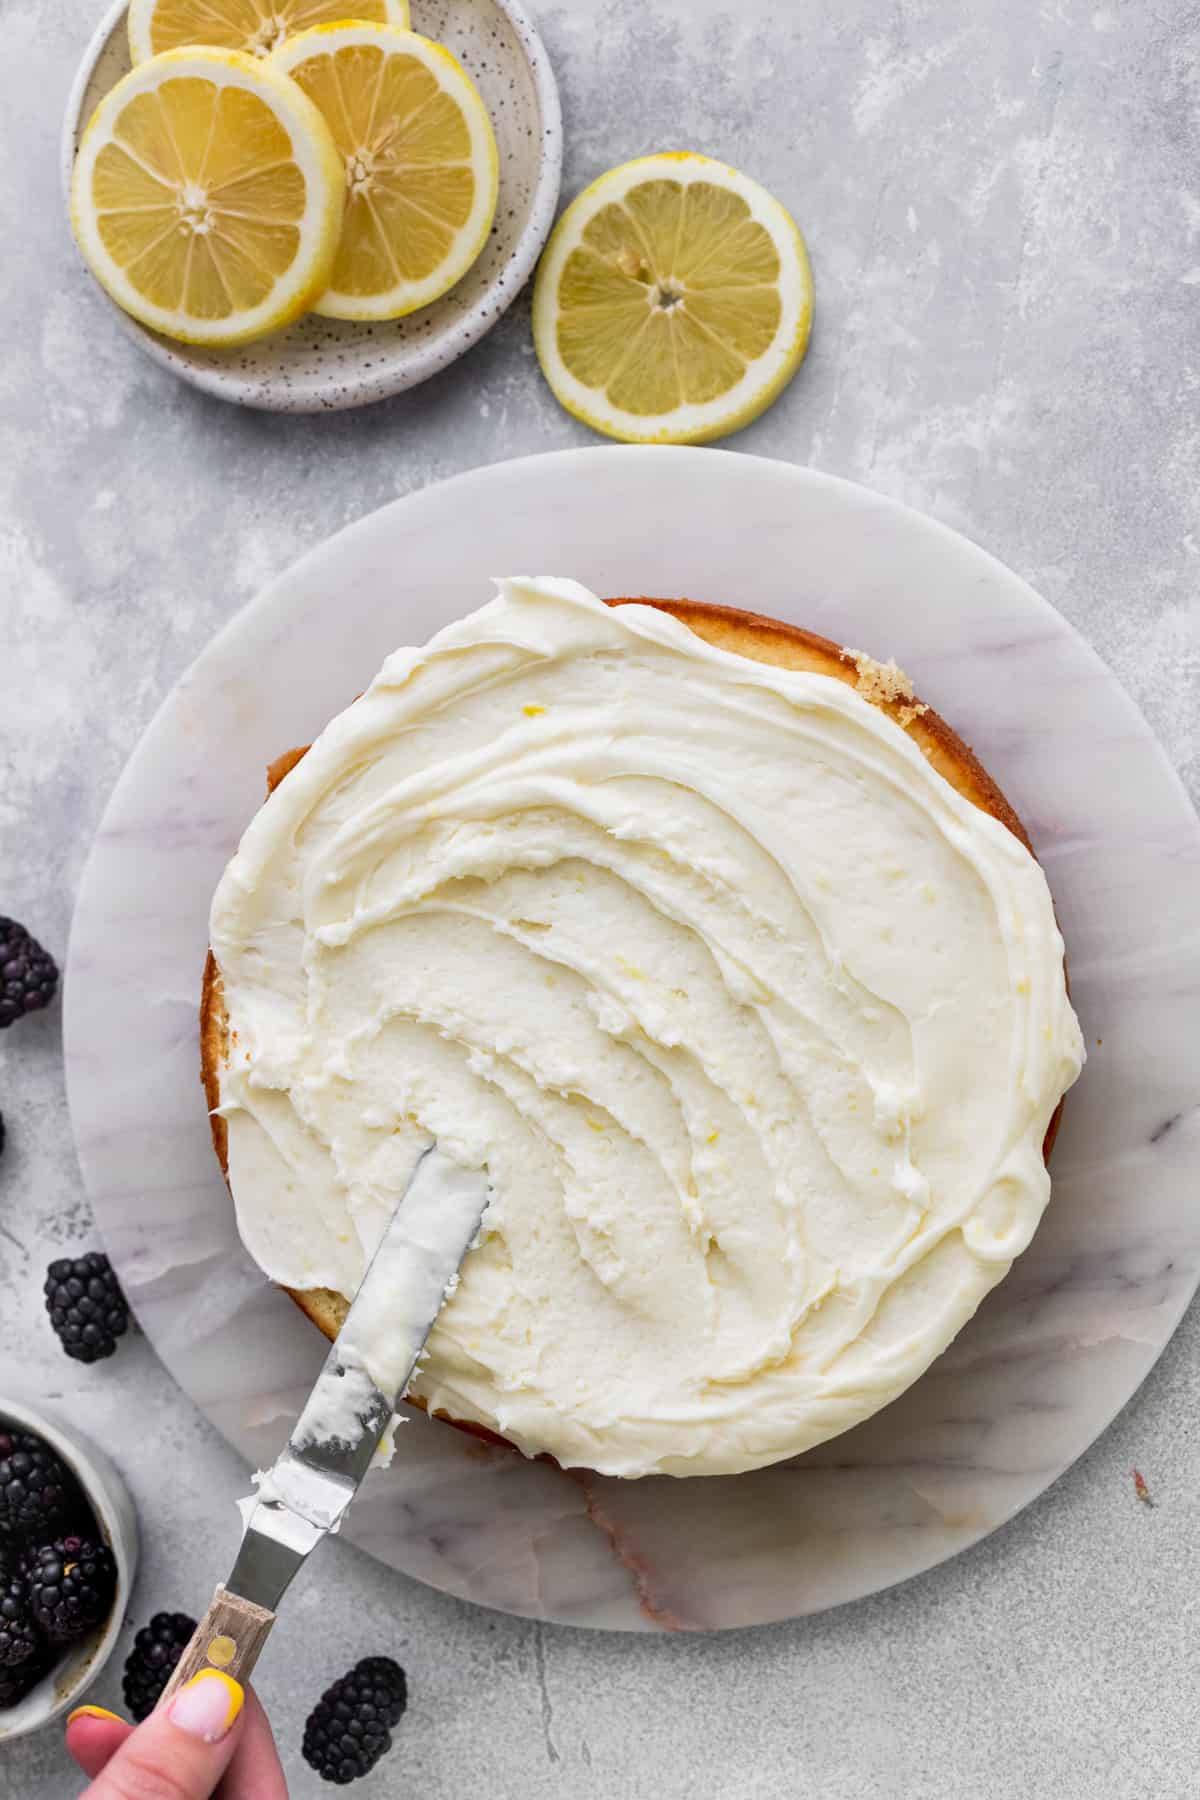 Spreading lemon frosting on top of cake.